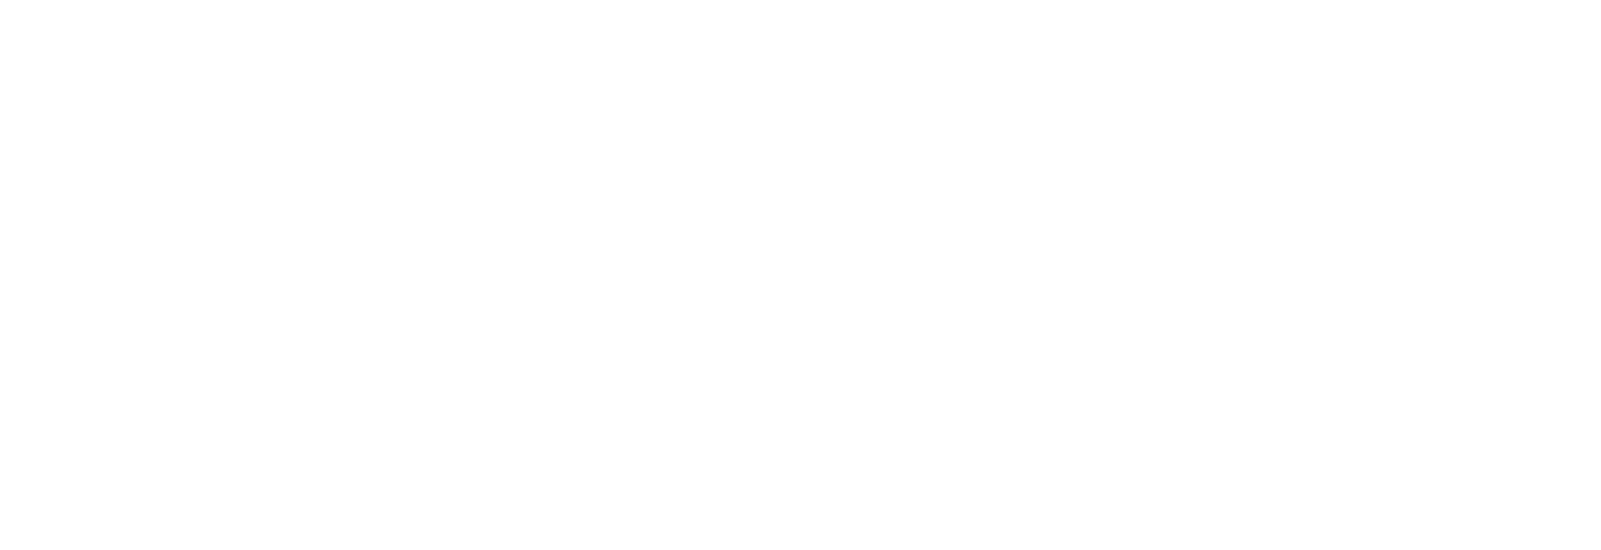 Hims & Hers Health logo pour fonds sombres (PNG transparent)